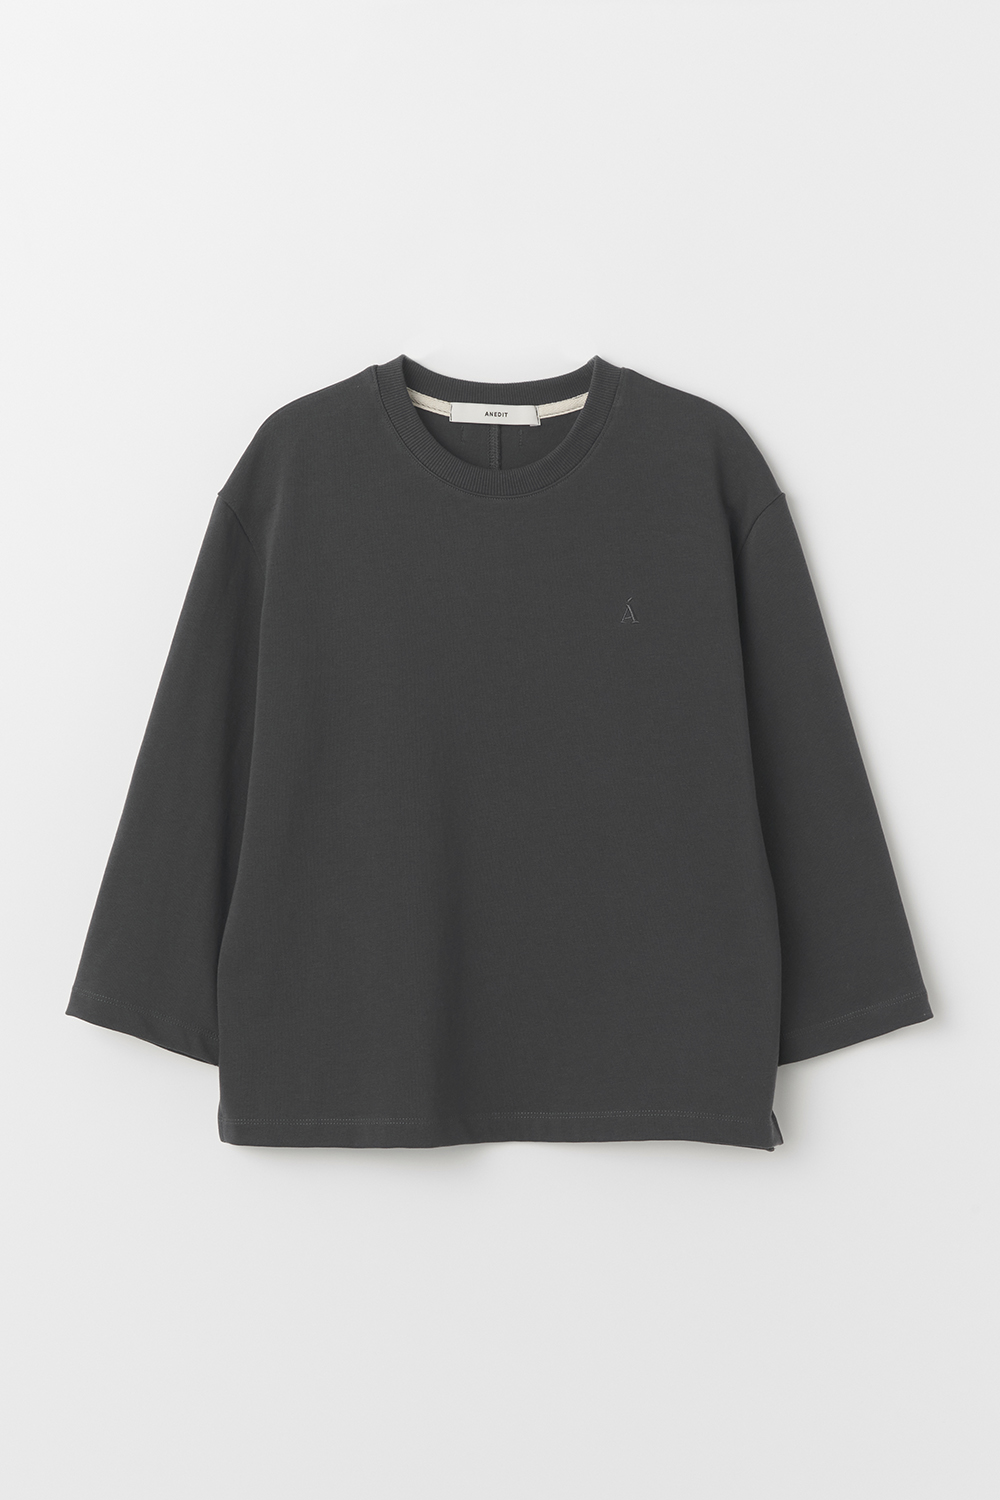 L 3/4 Sleeve Tshirt_Charcoal